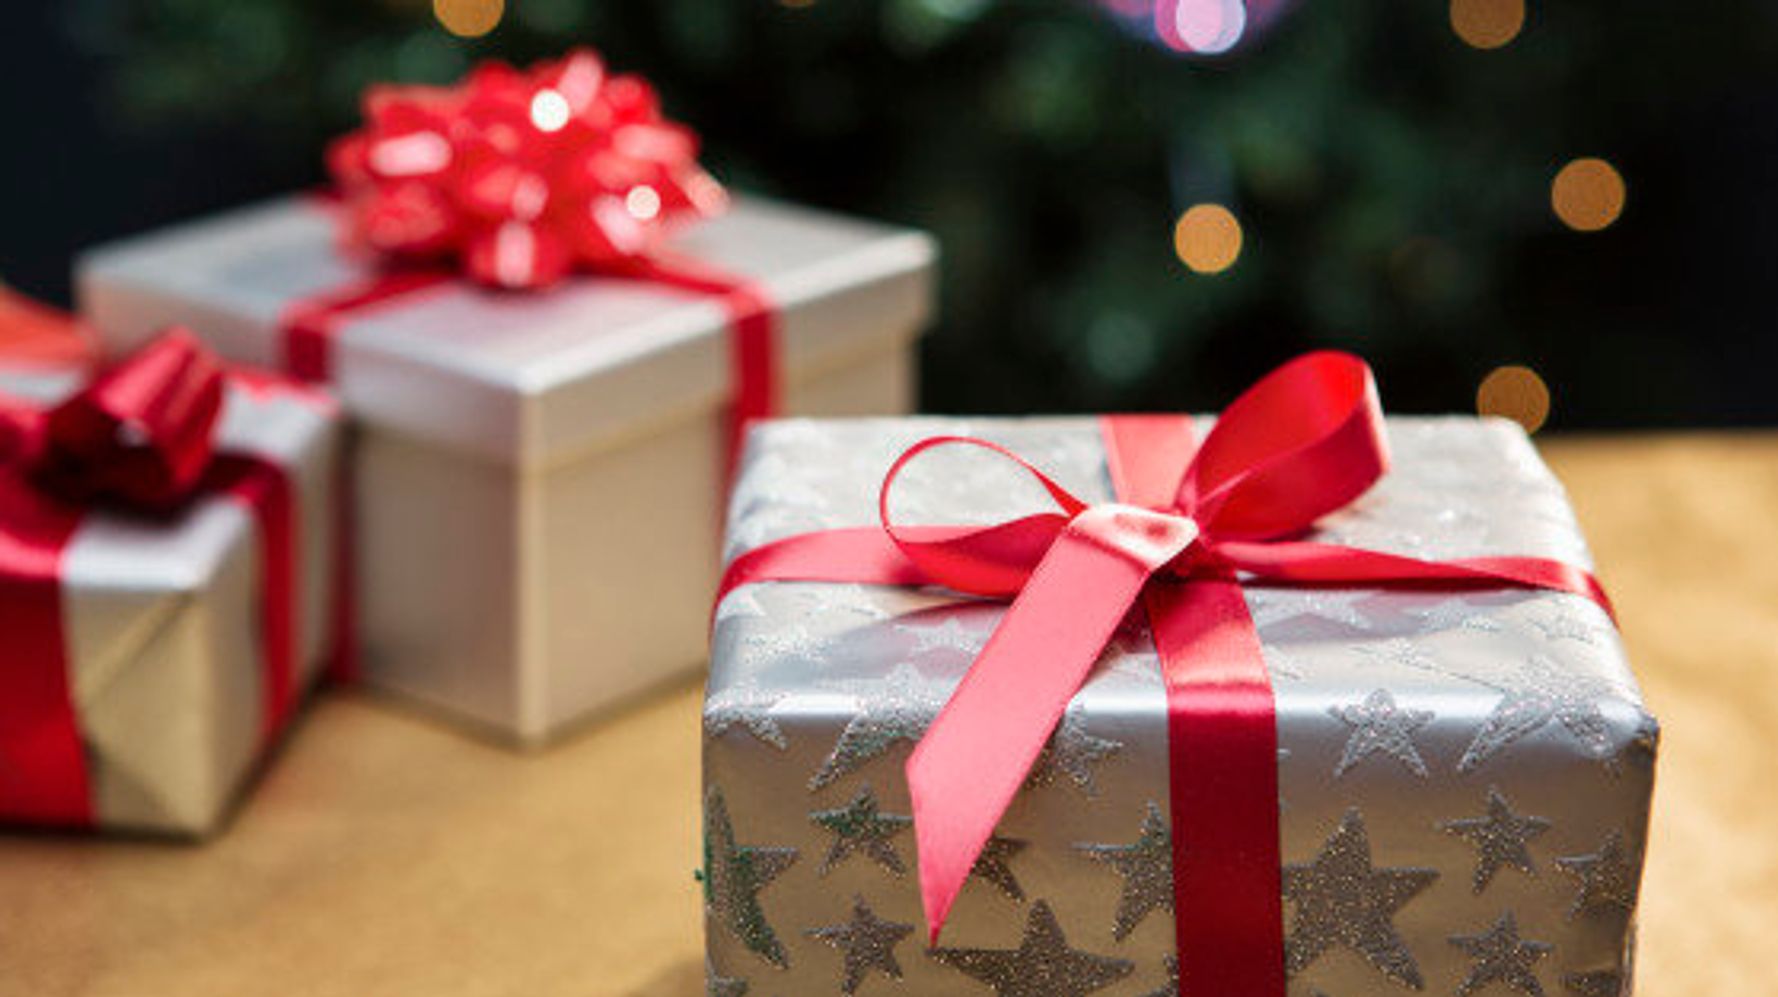 Go shopping presents you. Christmas-present.shop. Christmas Gifts. Present photo. Presents or Gifts.